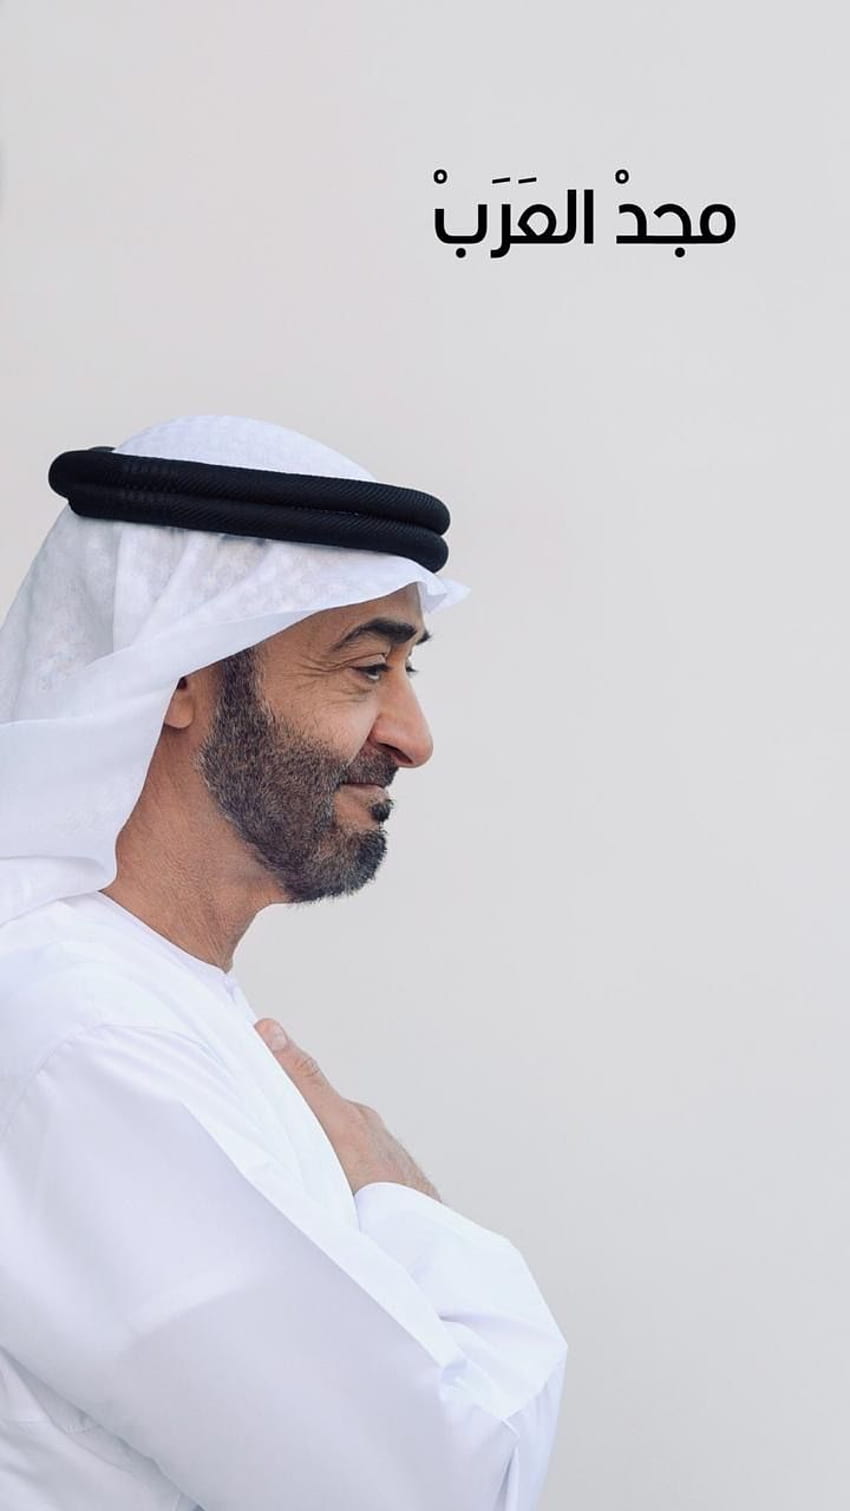 wail kmal on â¿Sheikh Mohammed Bin Zayed Al Nahyanâ¿. Aesthetic movies, My prince charming, Arabic funny, Arab Man HD phone wallpaper